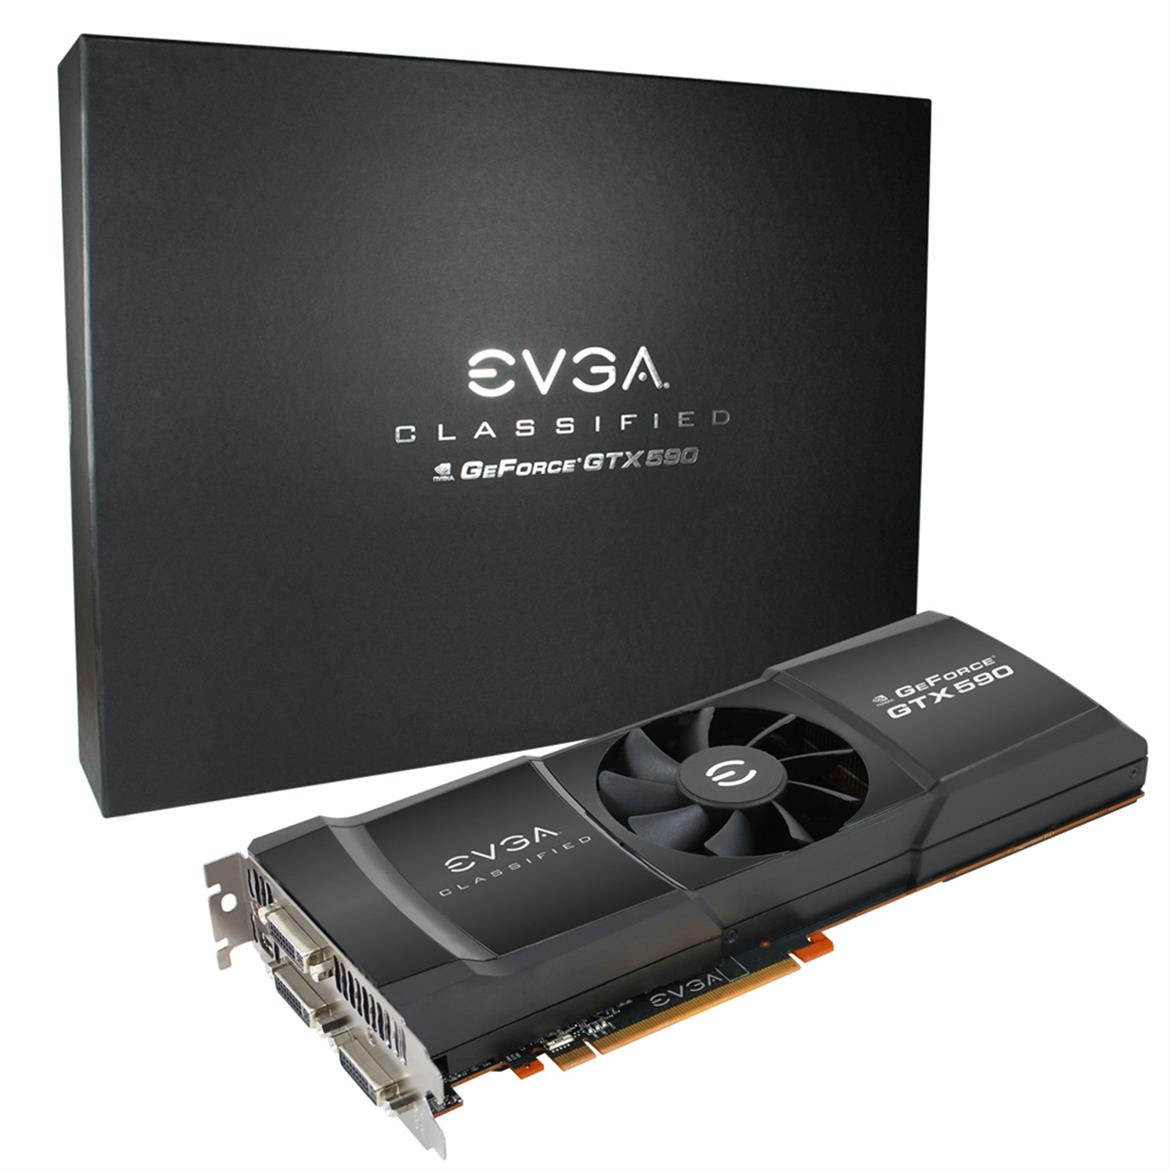 NVIDIA GeForce GTX 590: Dual GF110s, One PCB